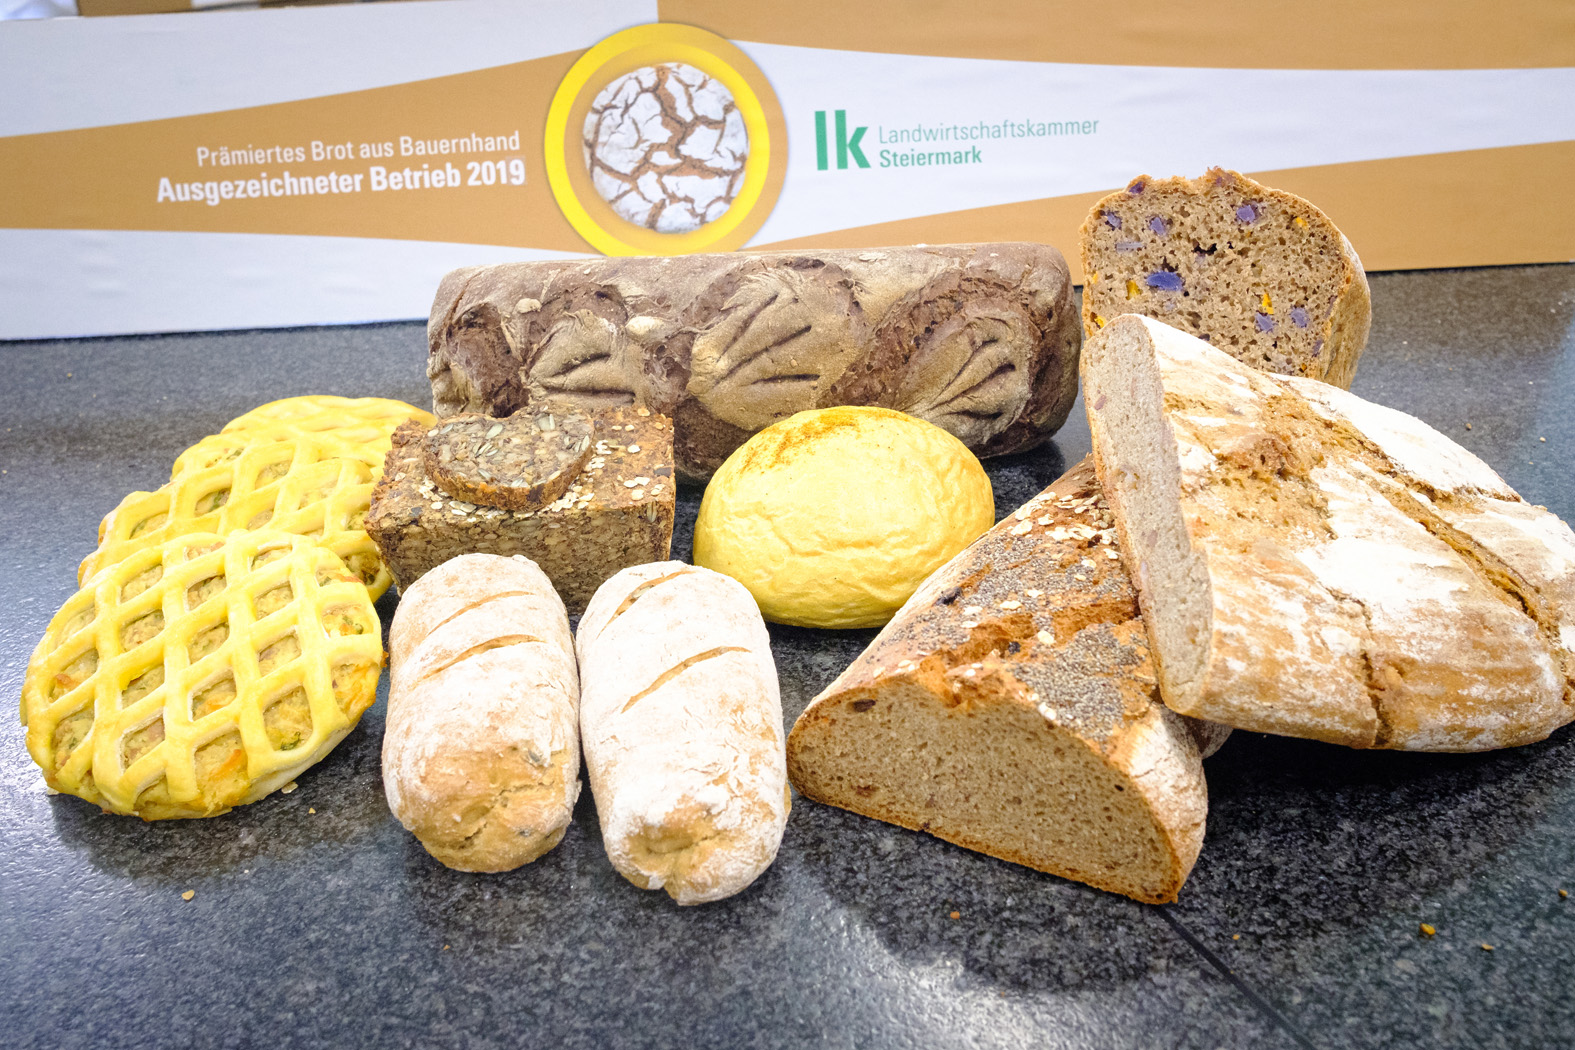 Landesprämierung Brot 2019